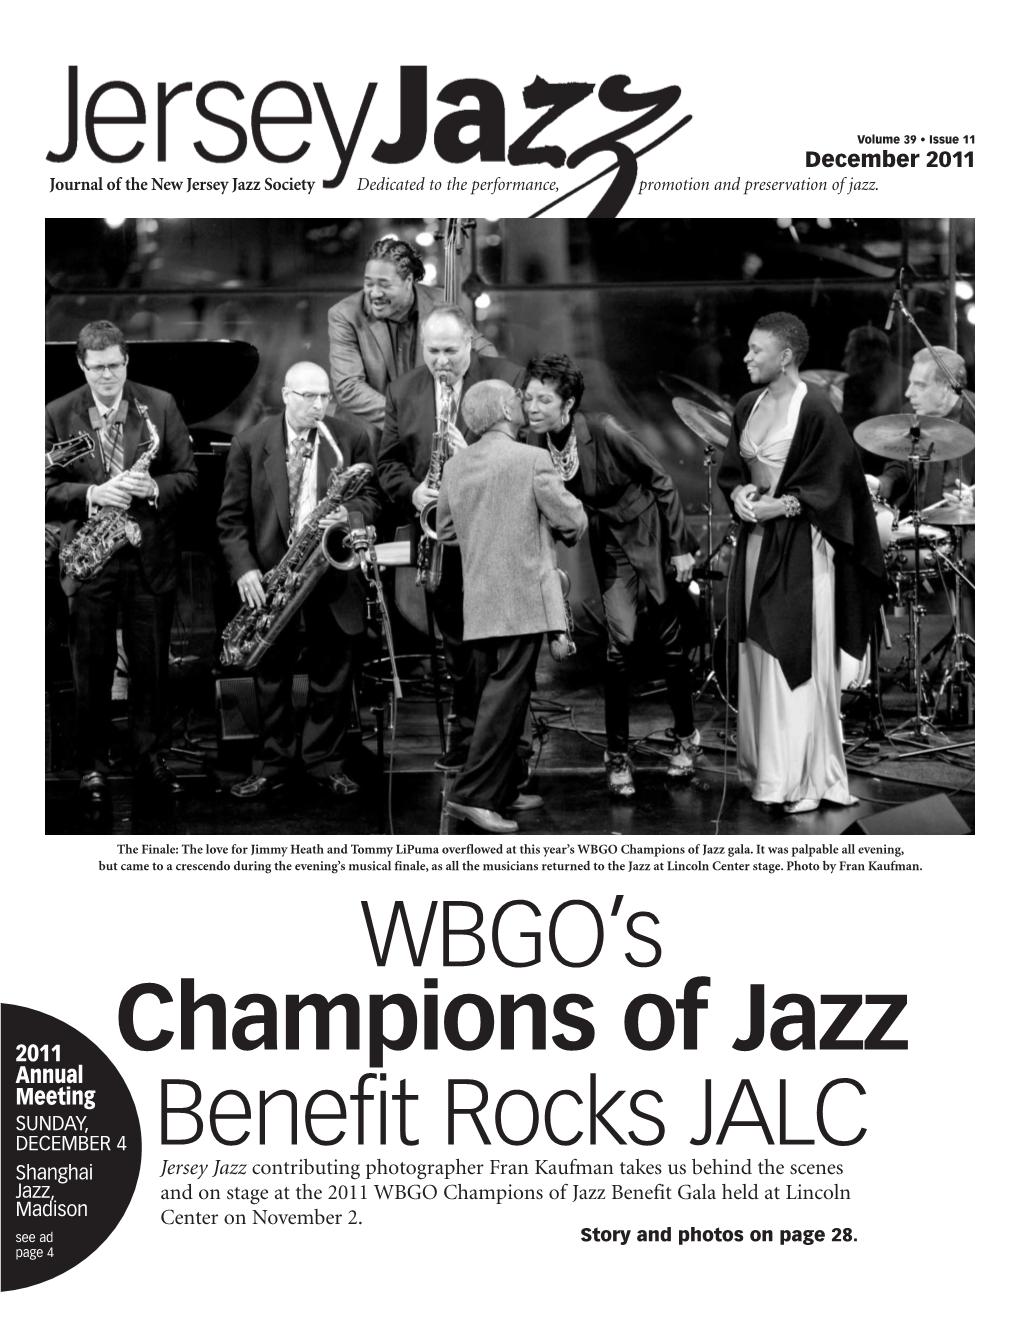 WBGO's Champions of Jazz Benefit Rocks JALC